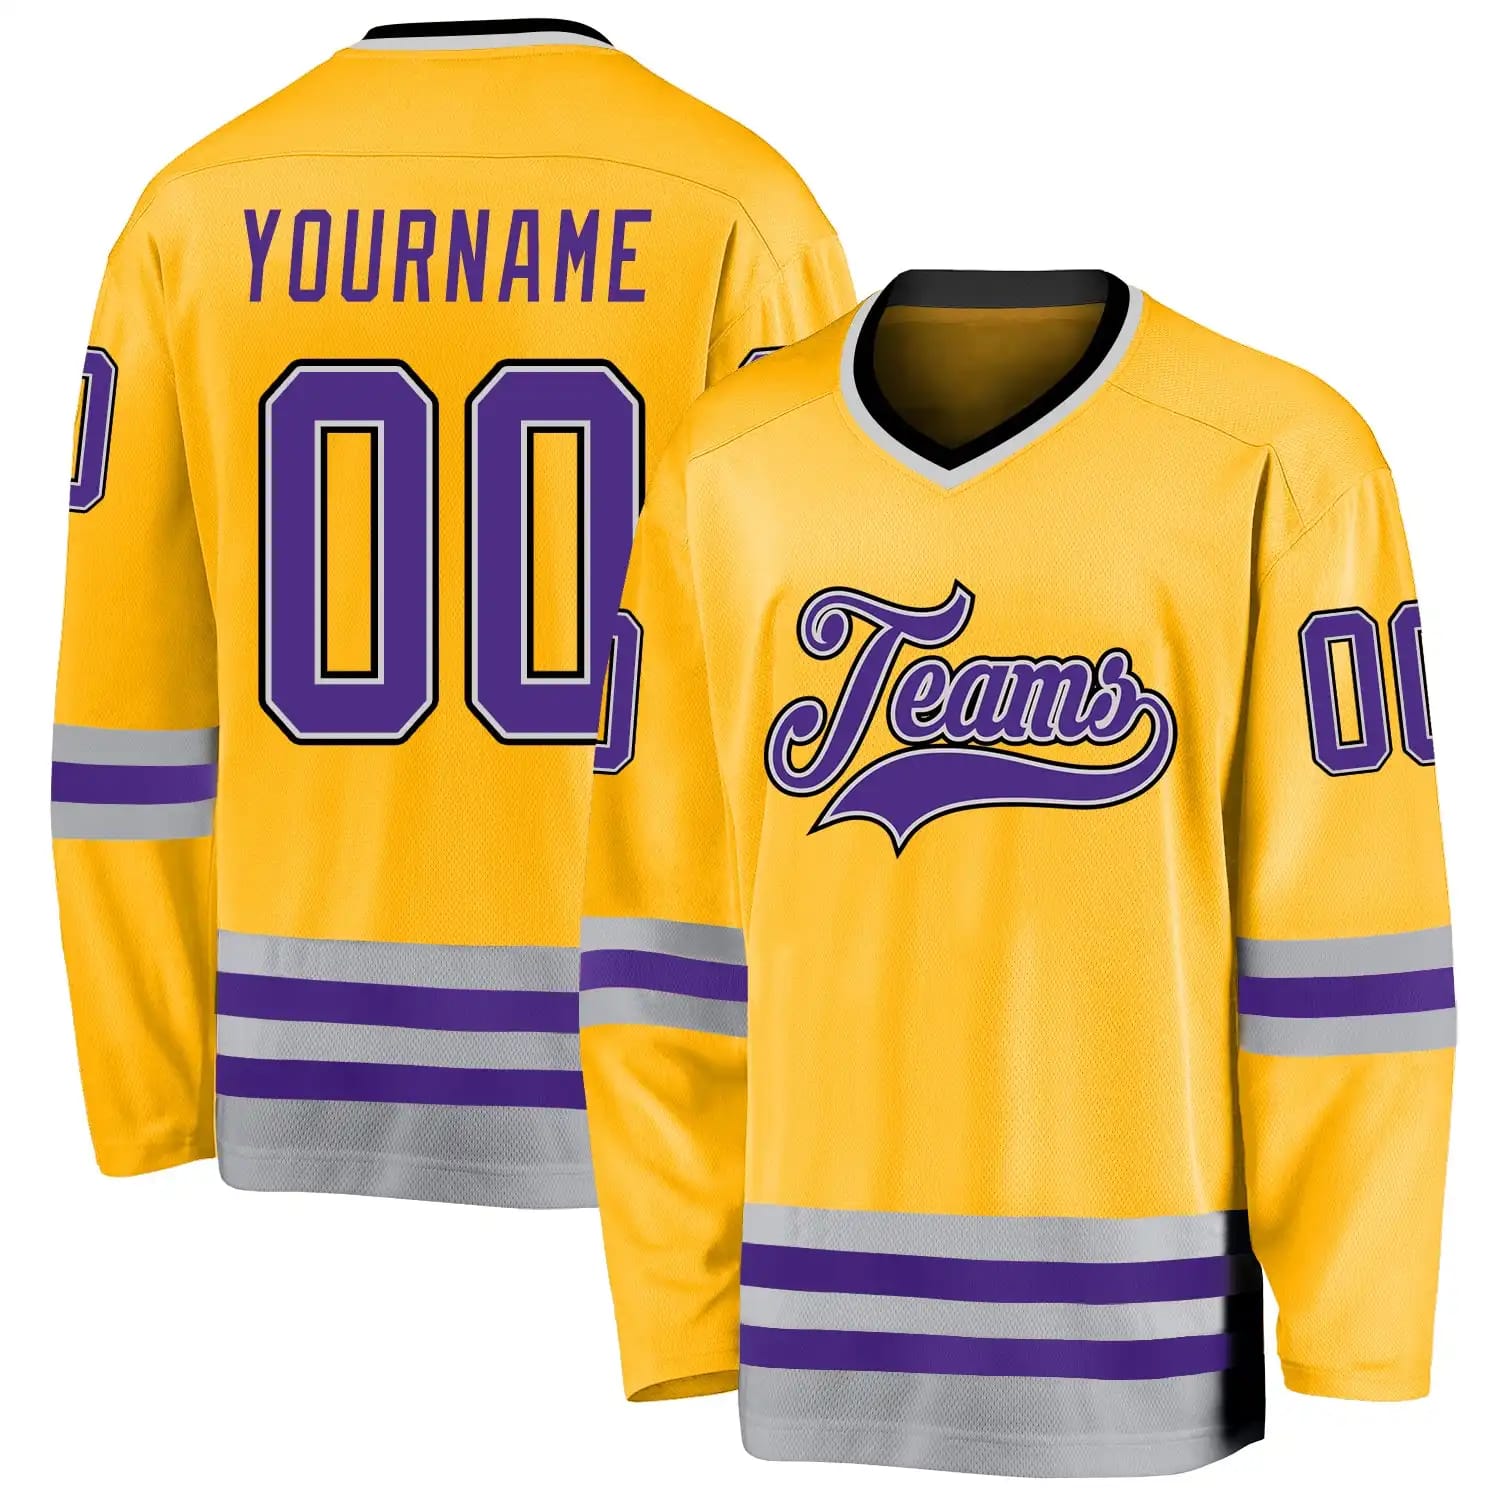 Stitched And Print Gold Purple-gray Hockey Jersey Custom